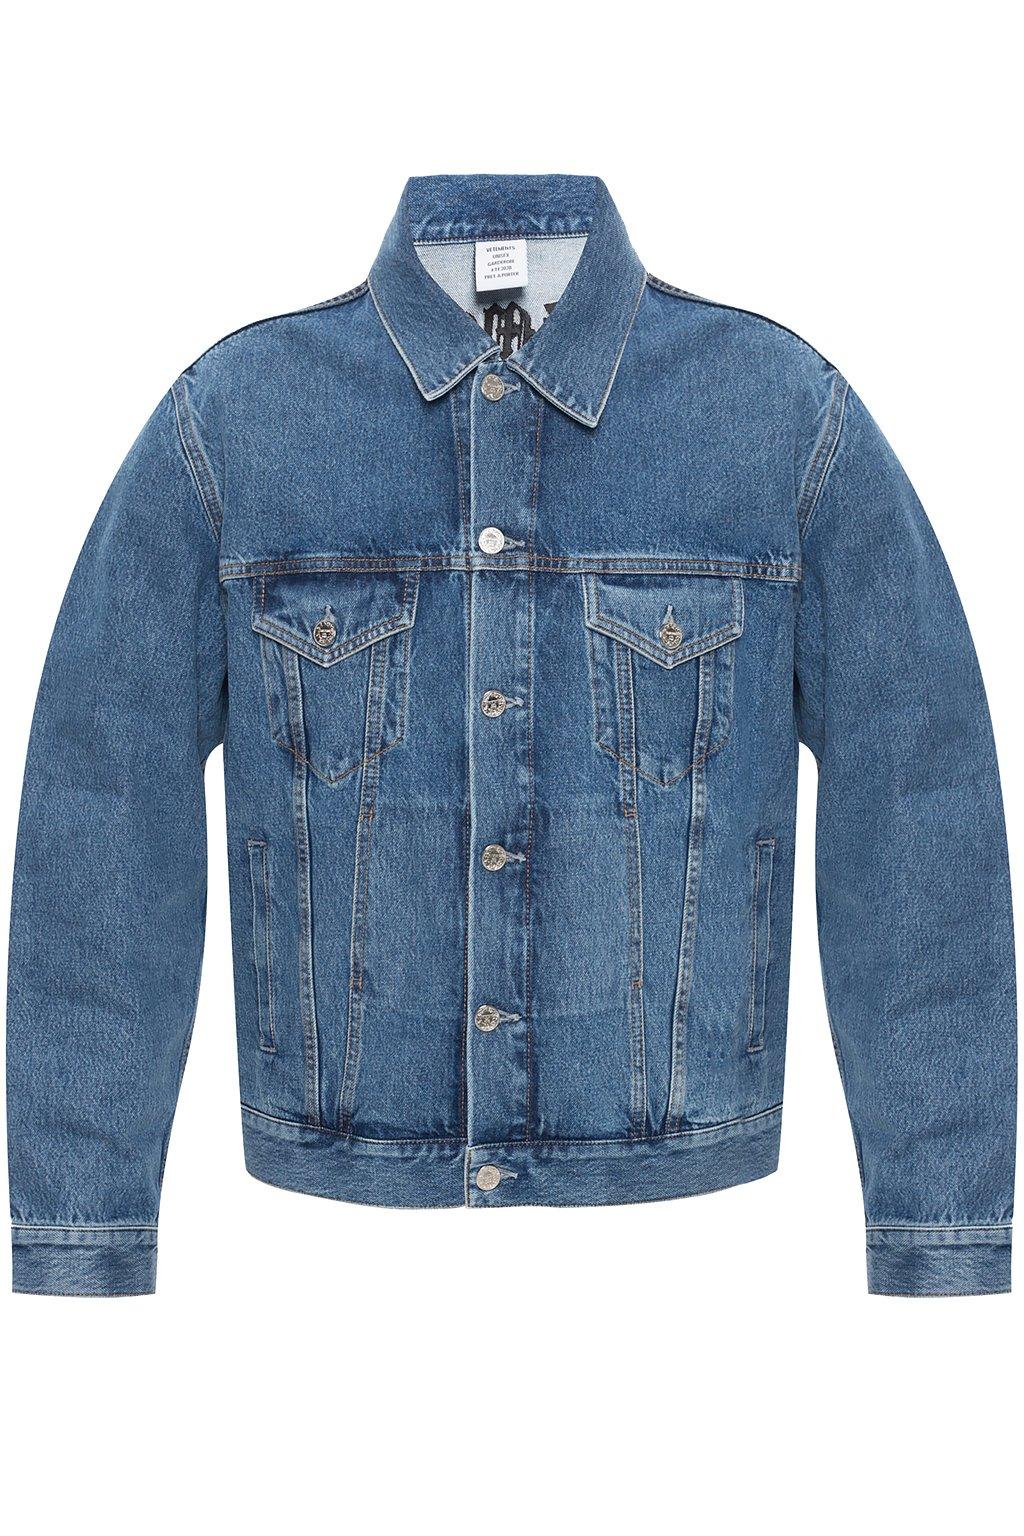 Vetements Denim Jacket With Logo in Light Blue (Blue) for Men - Lyst